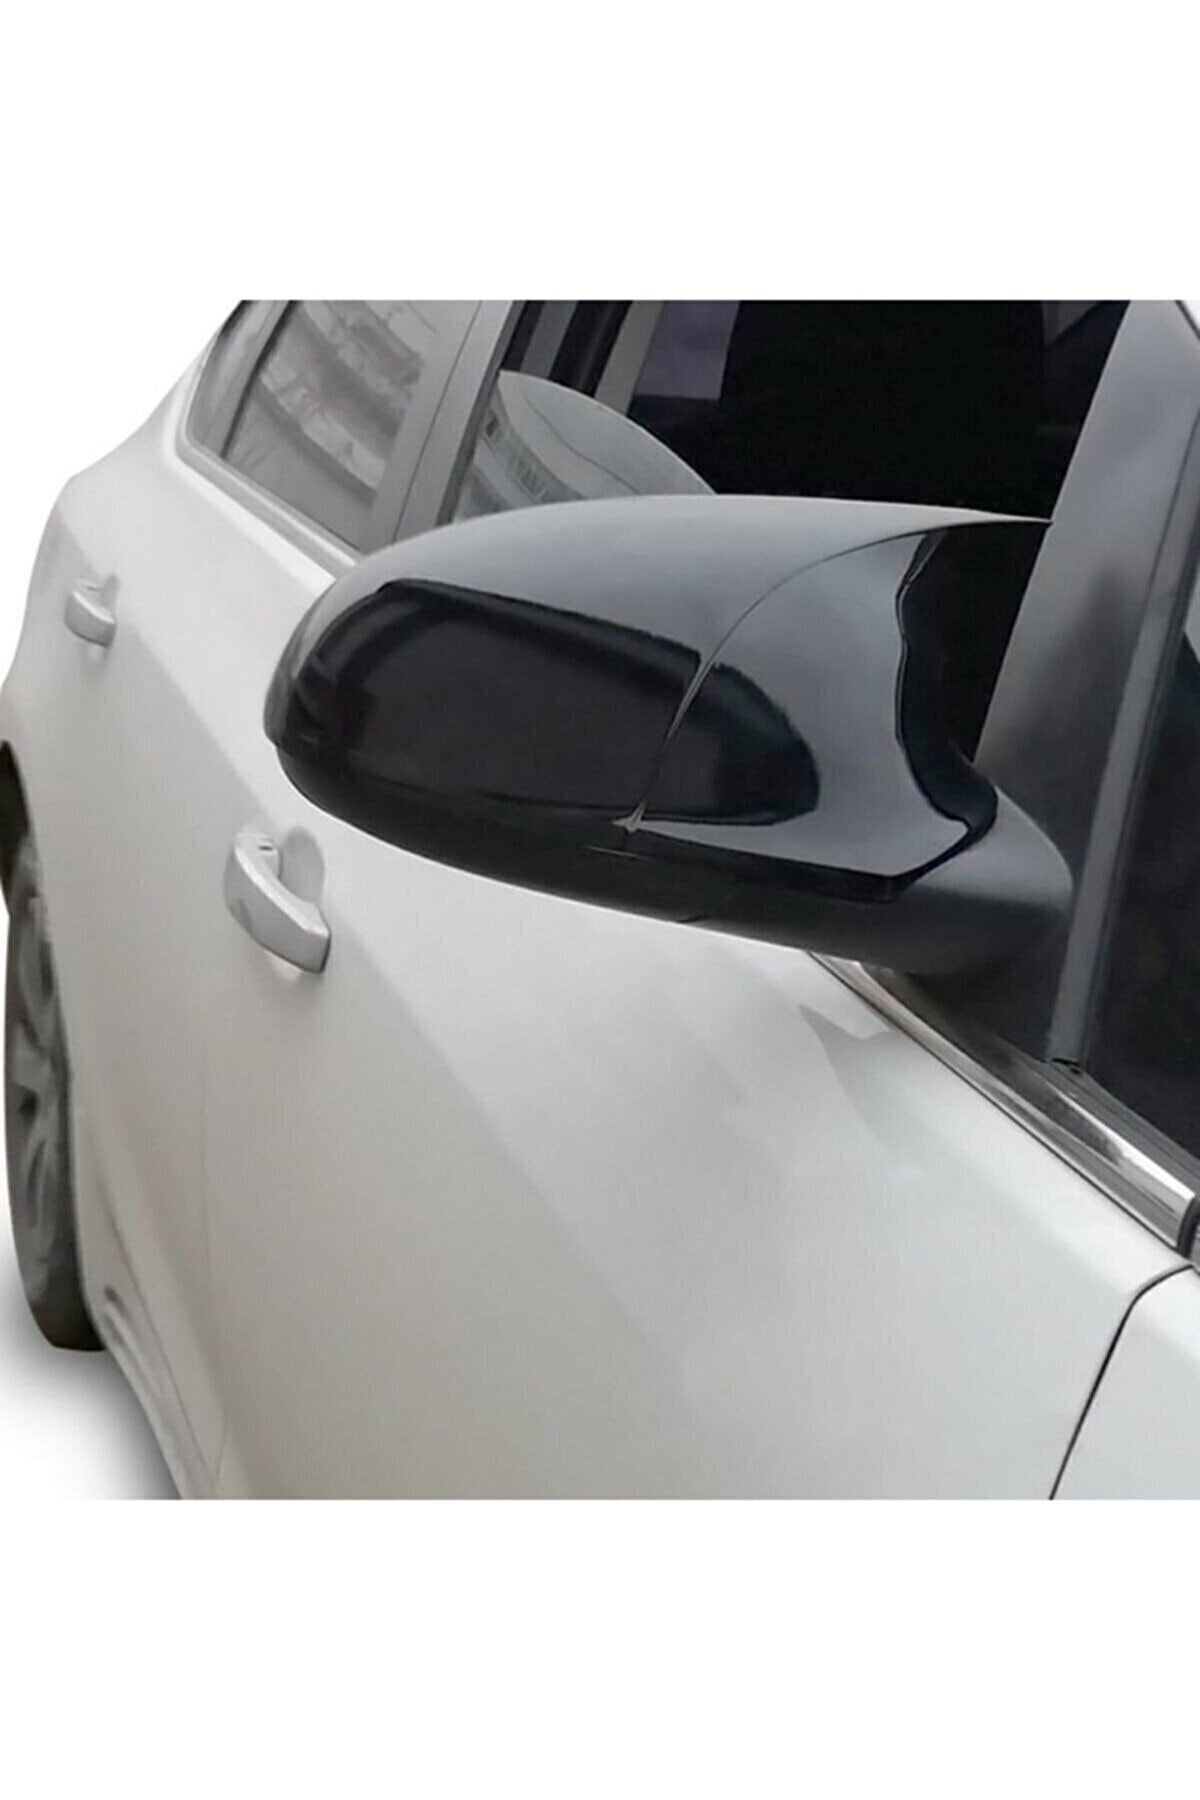 Genel Markalar Opel Corsa D Yarasa Ayna Kapağı Piano Siyah Abs 2006-2014 Arasına Uyumludur